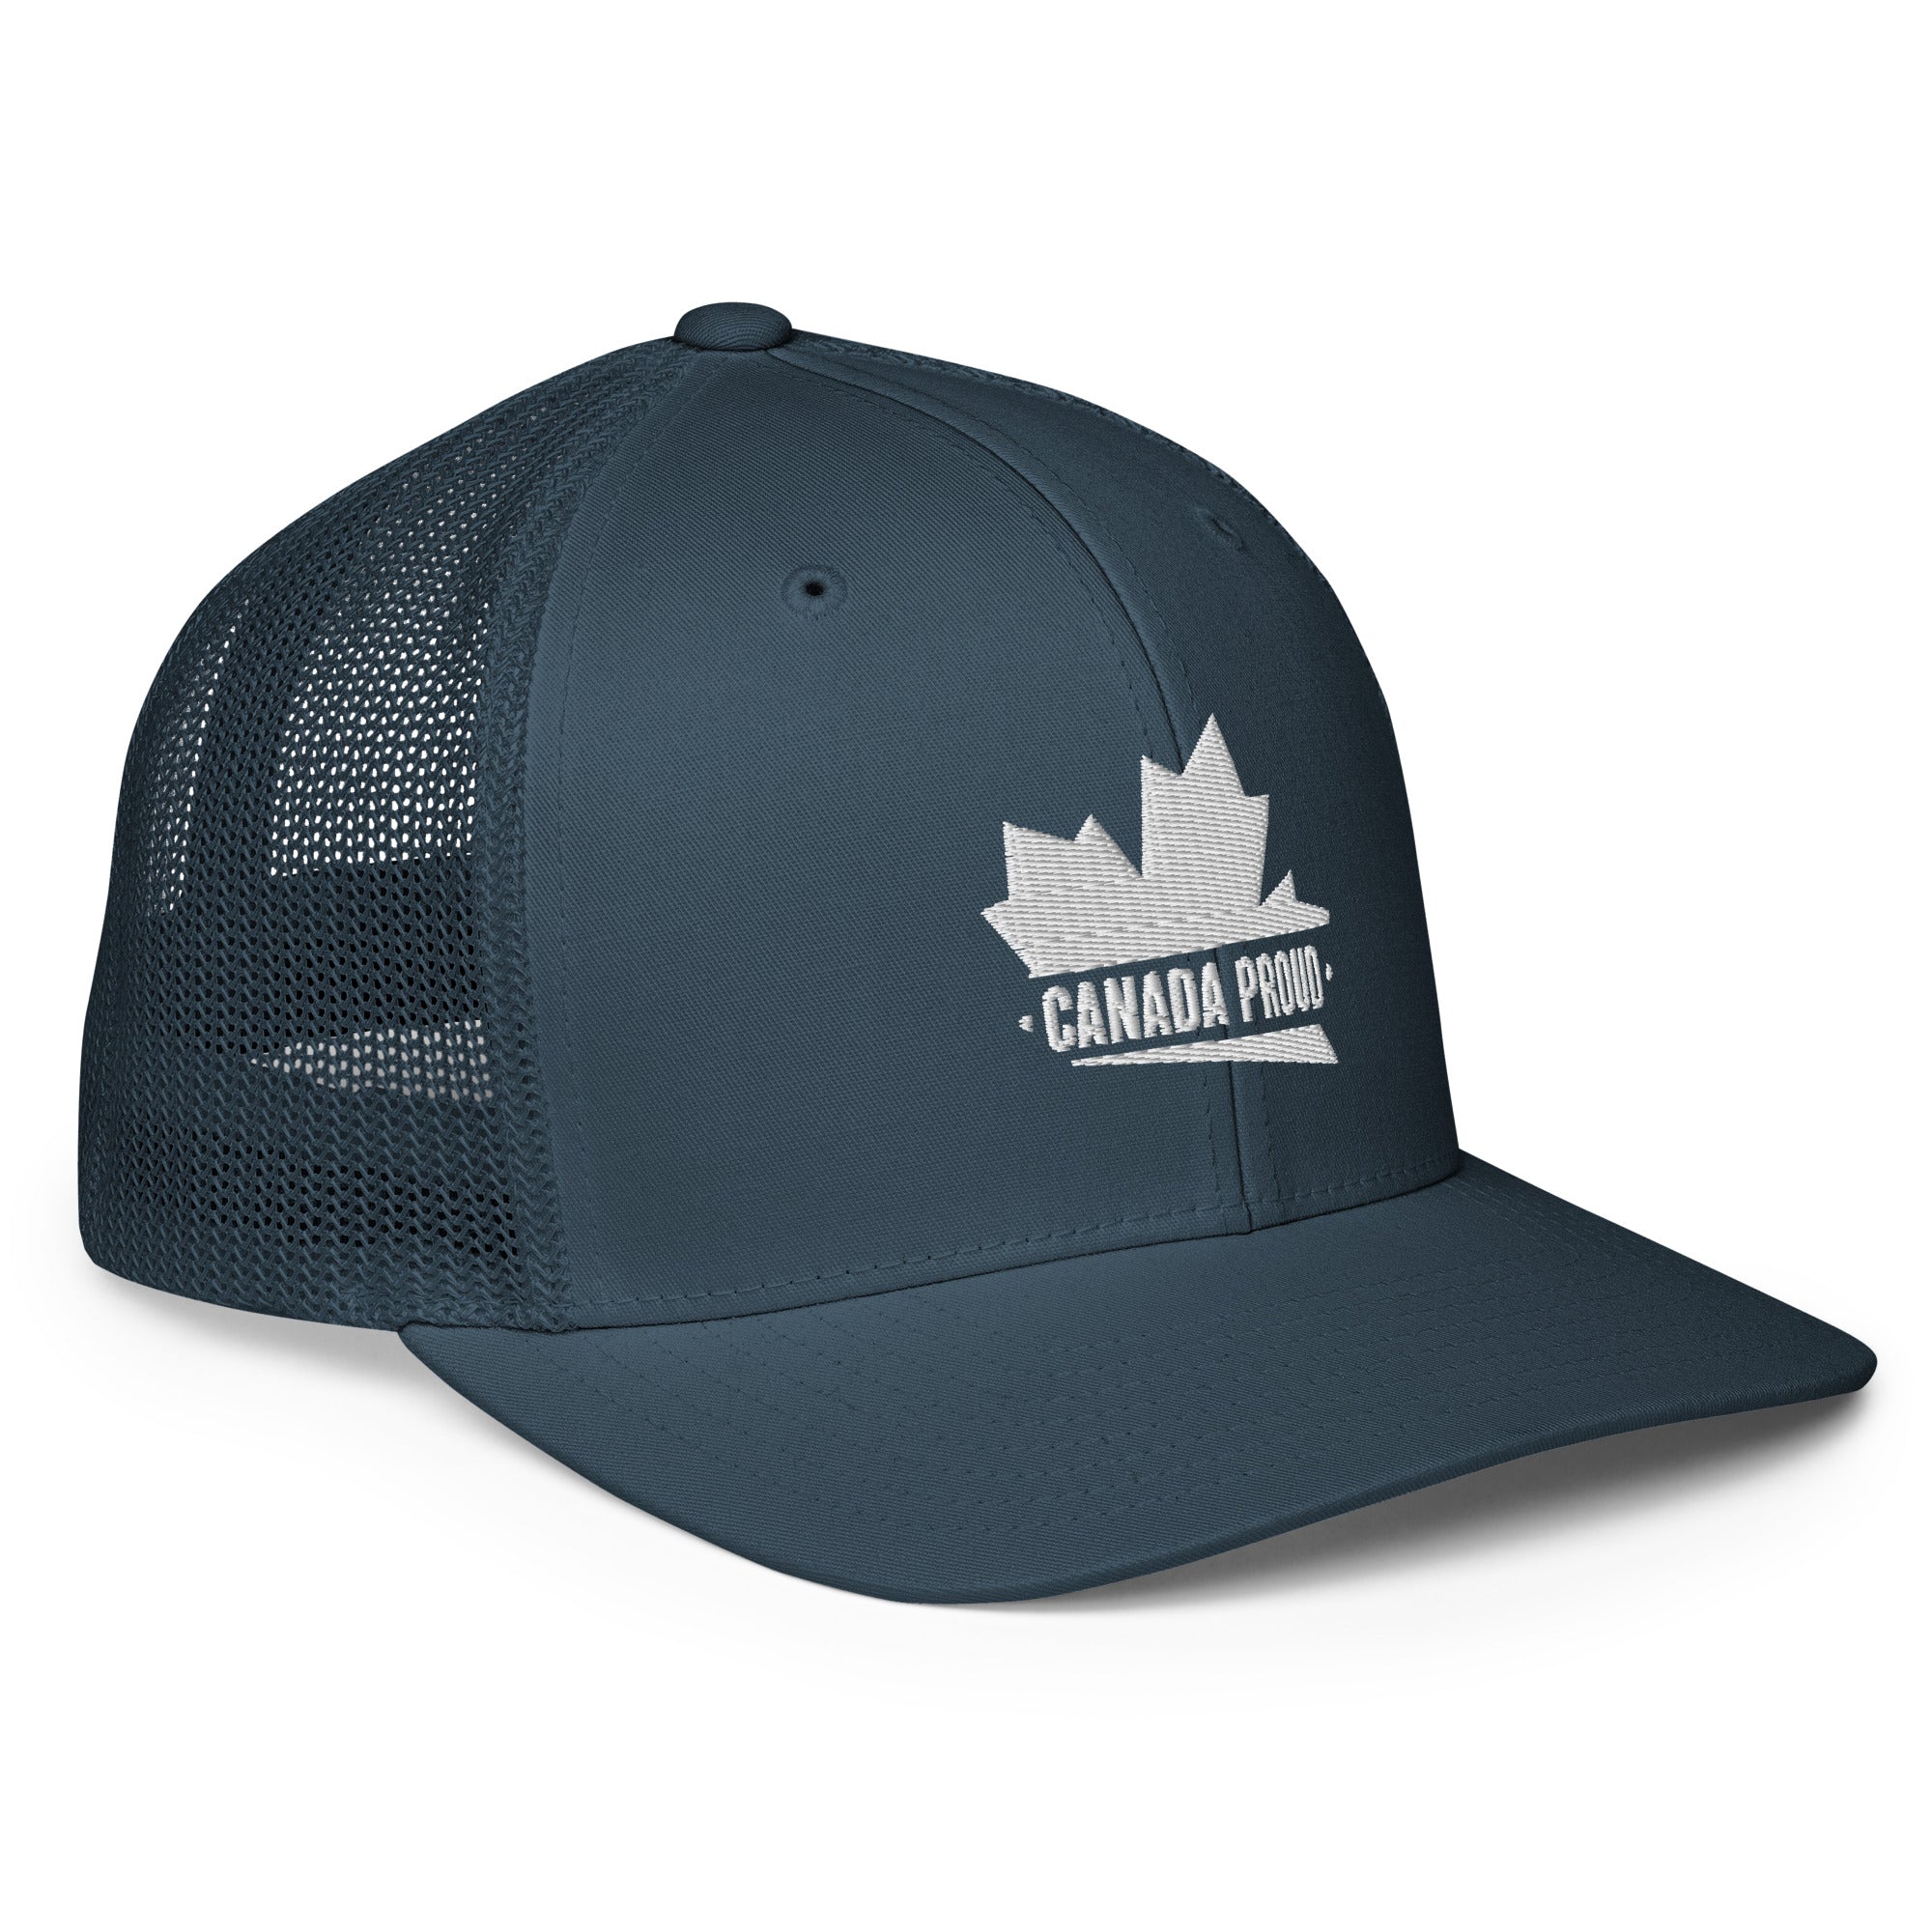 Canada Proud Mesh Back Trucker Cap